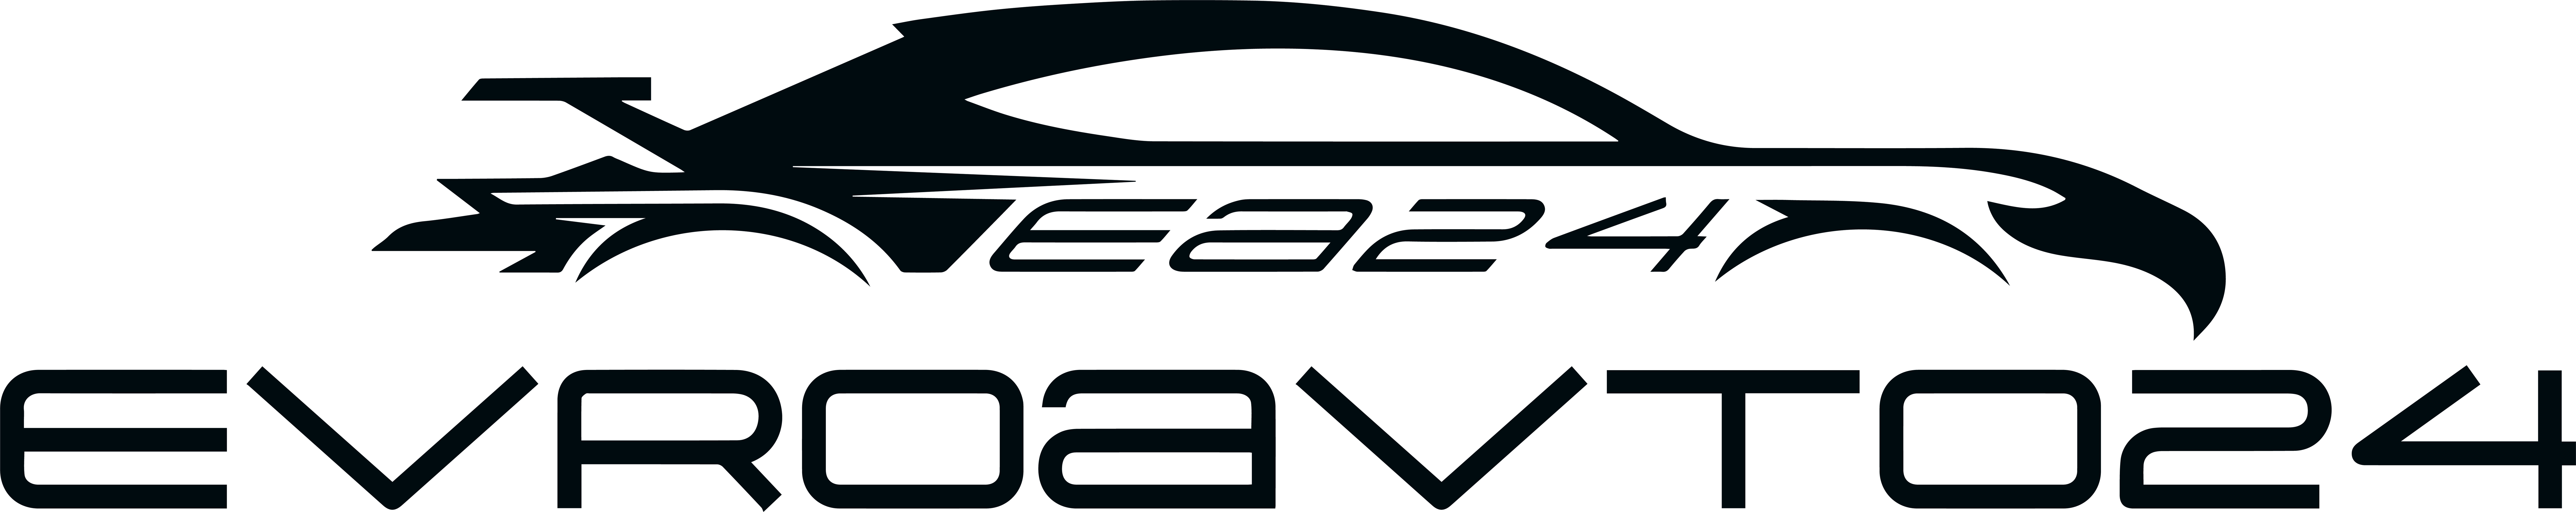 ООО ЕвроАвто24 Логотип(logo)